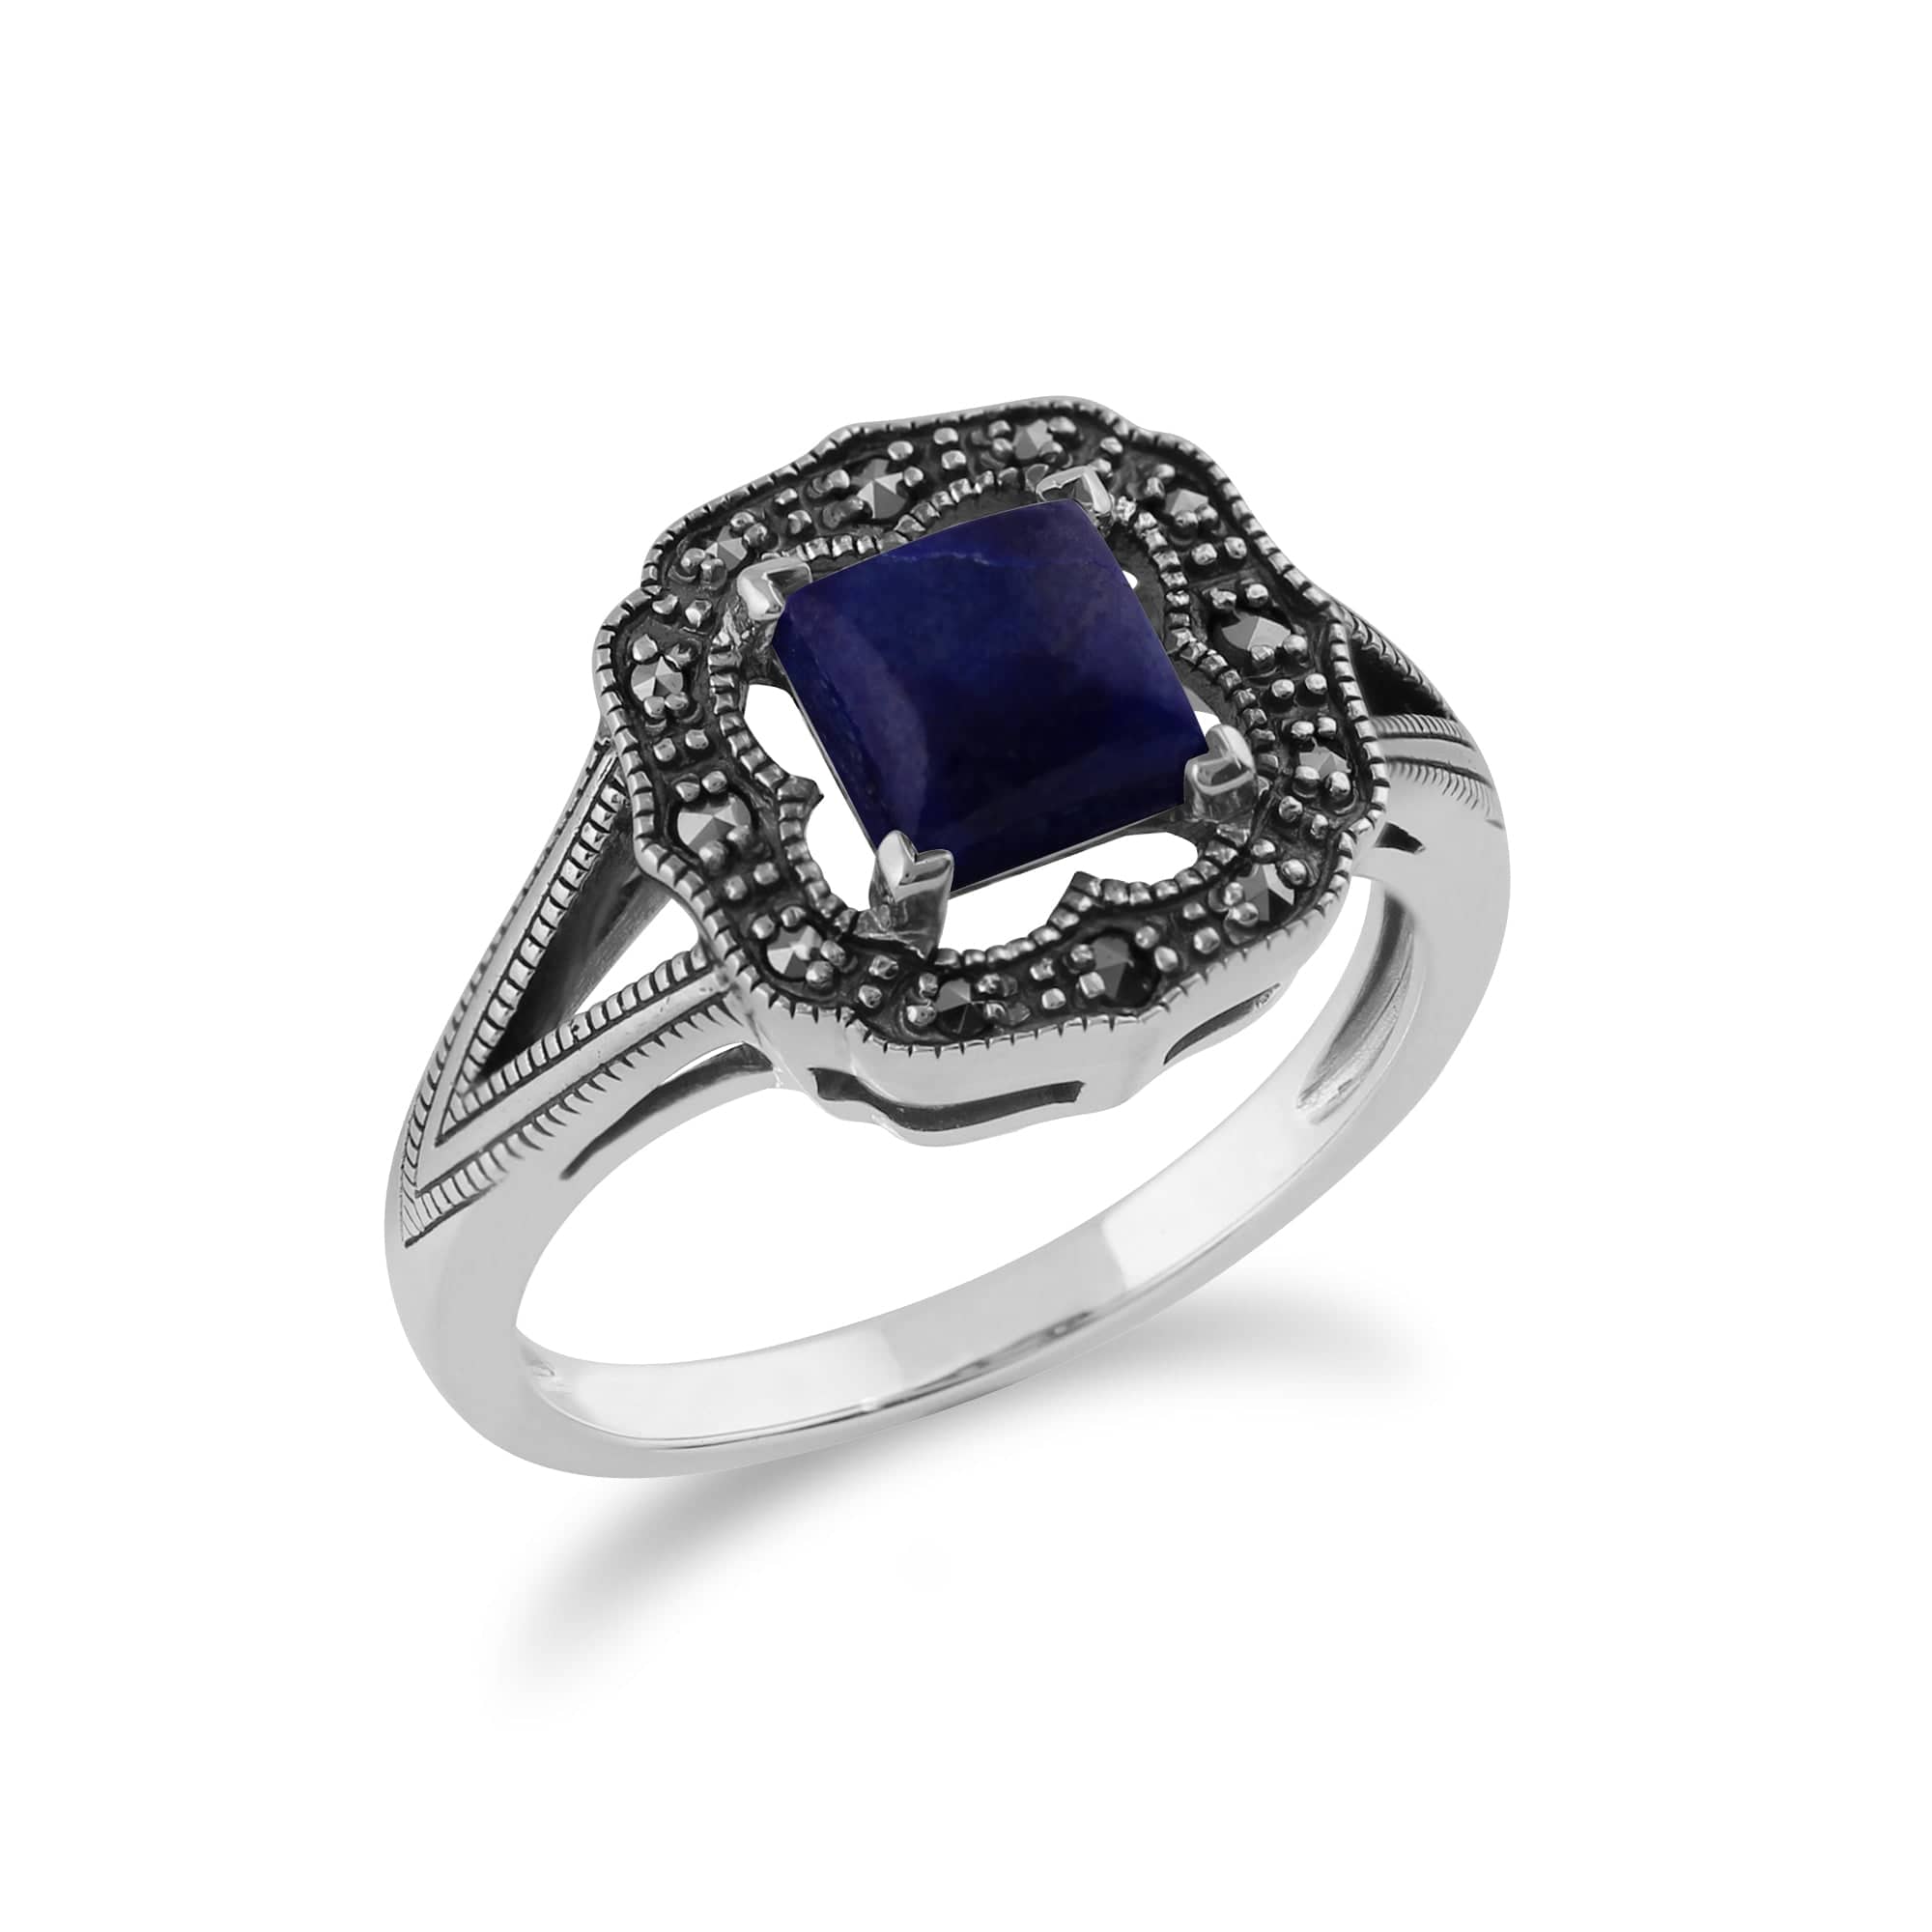 Gemondo 925 Sterling Silver 0.58ct Lapis Lazuli & Marcasite Art Deco Ring Image 2